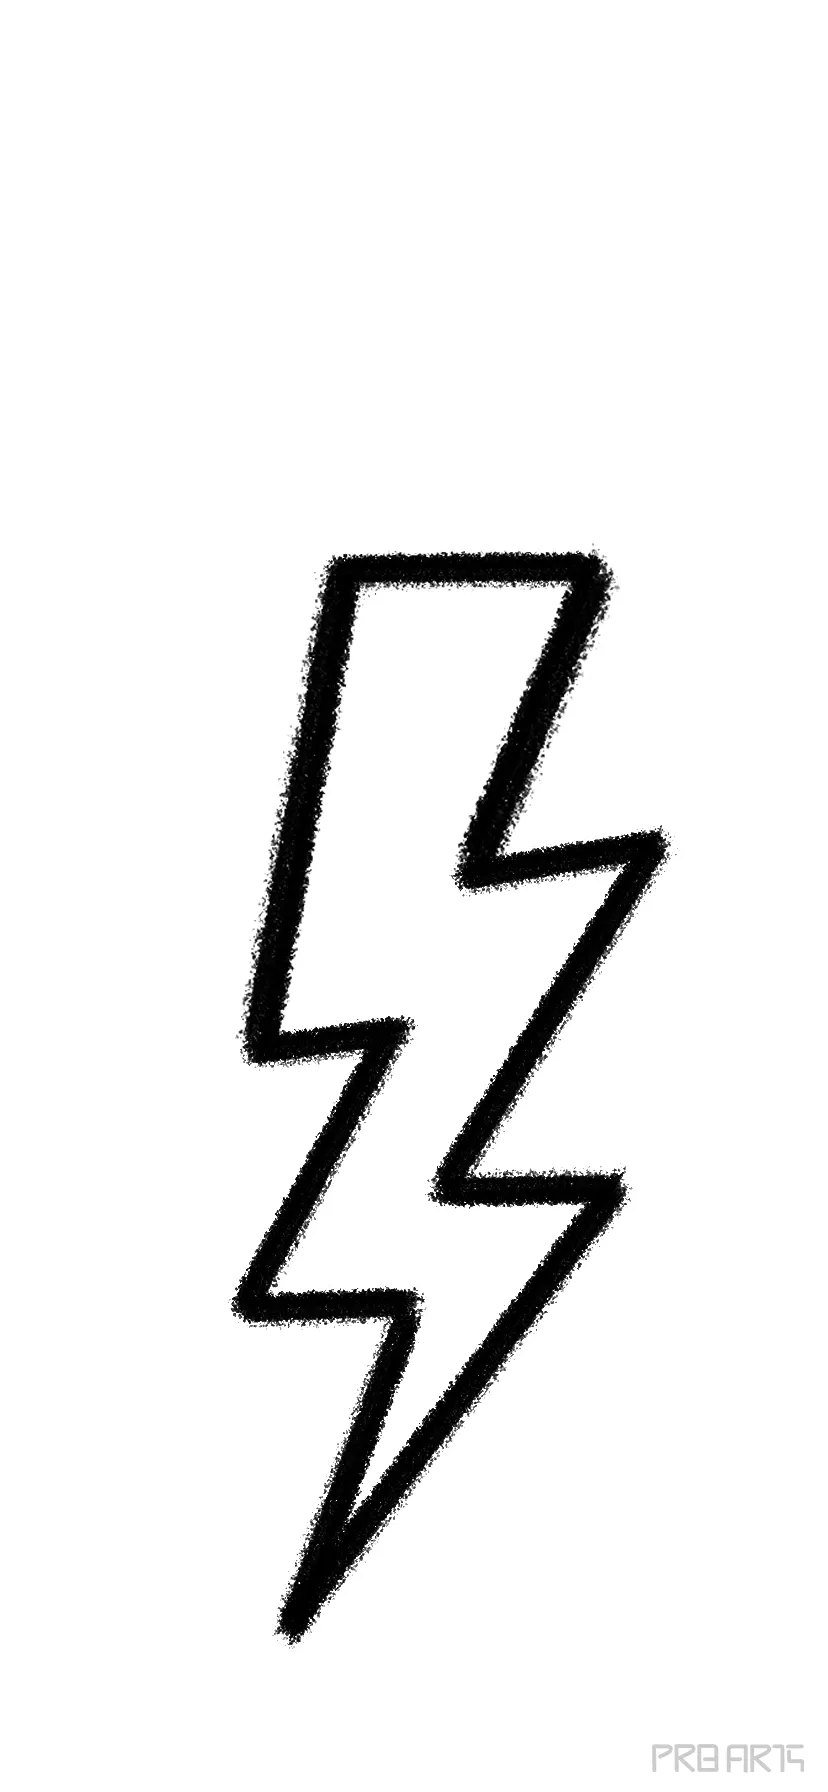 Easy Lightning Bolt Drawing for Kids - PRB ARTS